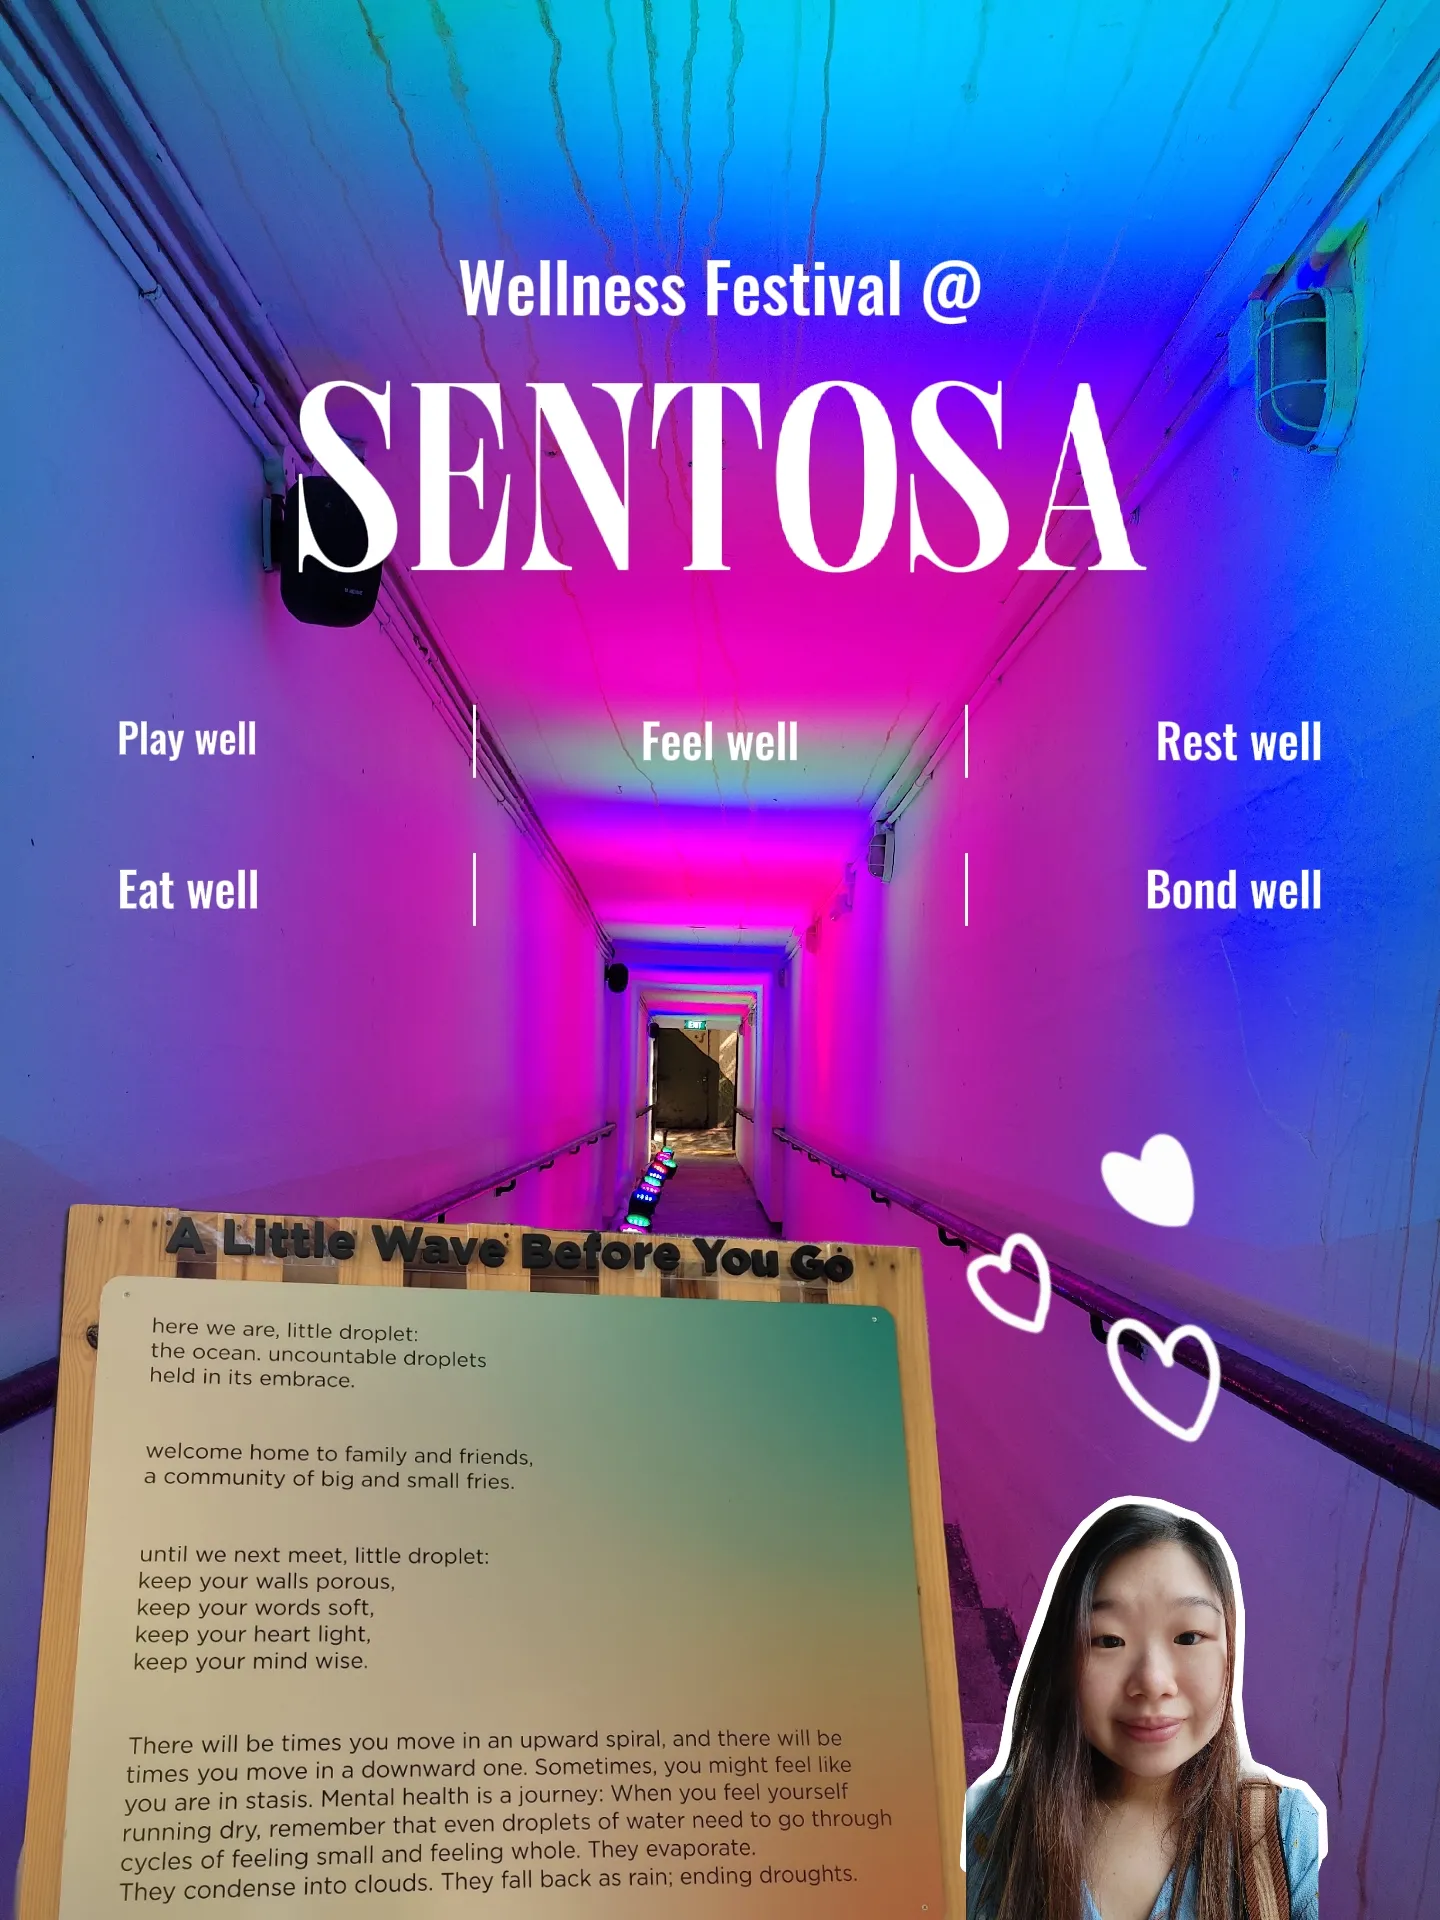 Free ✨wellness✨ activities in Sentosa! 's images(0)